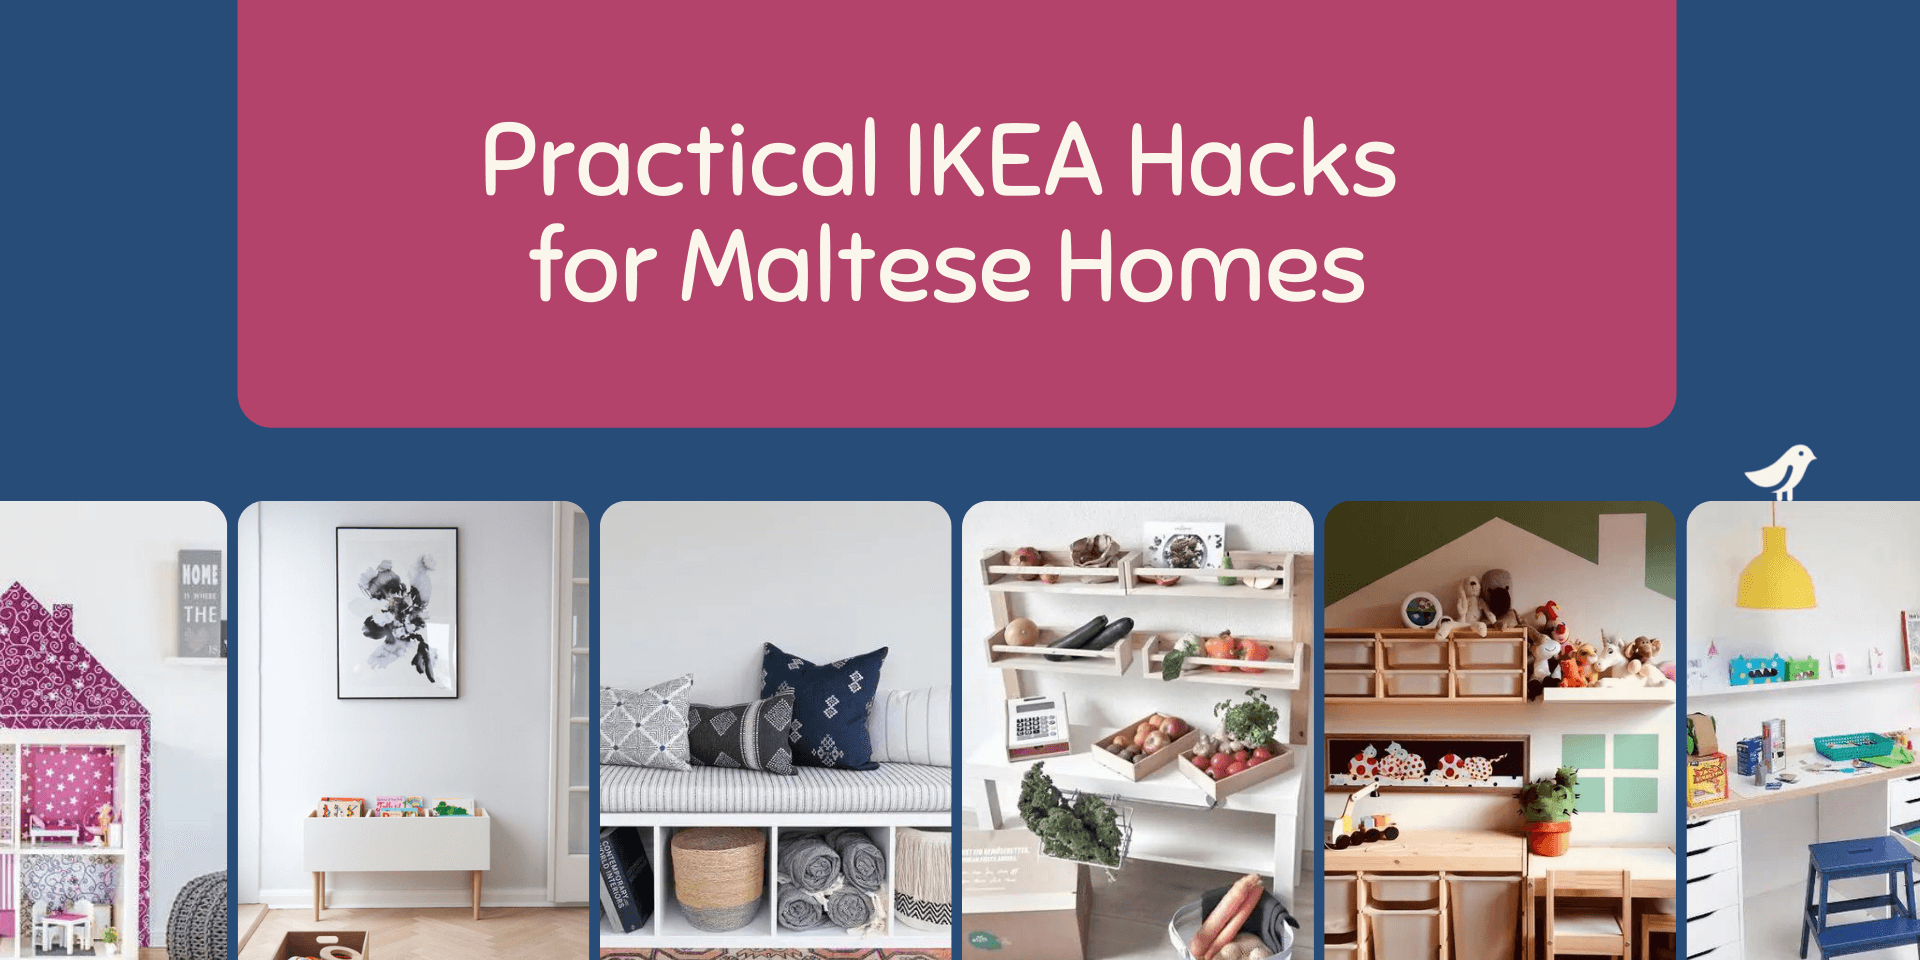 Practical Ikea Hacks for Maltese Homes